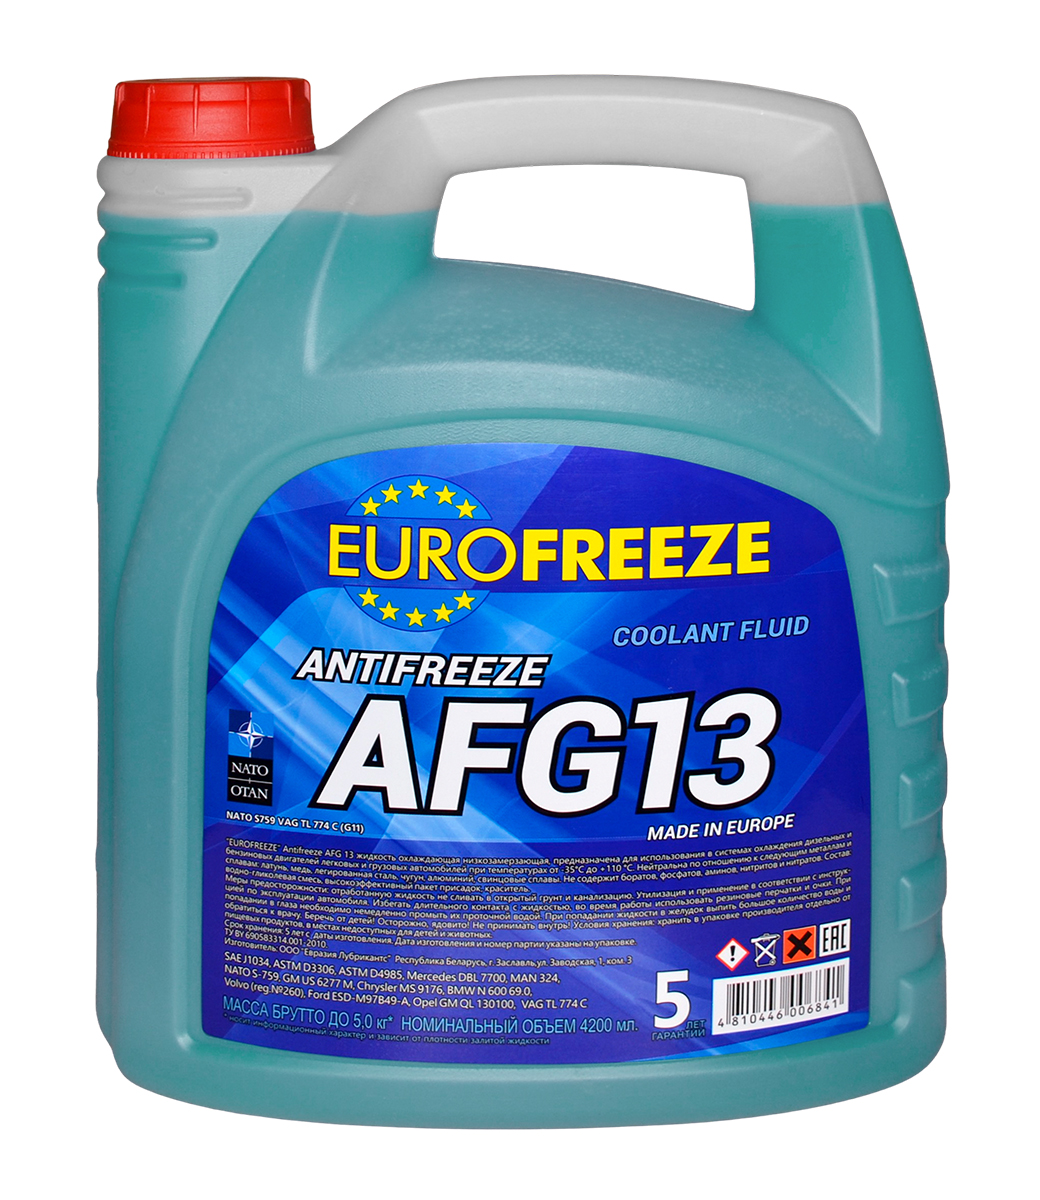 Eurofreeze Antifreeze AFG 13